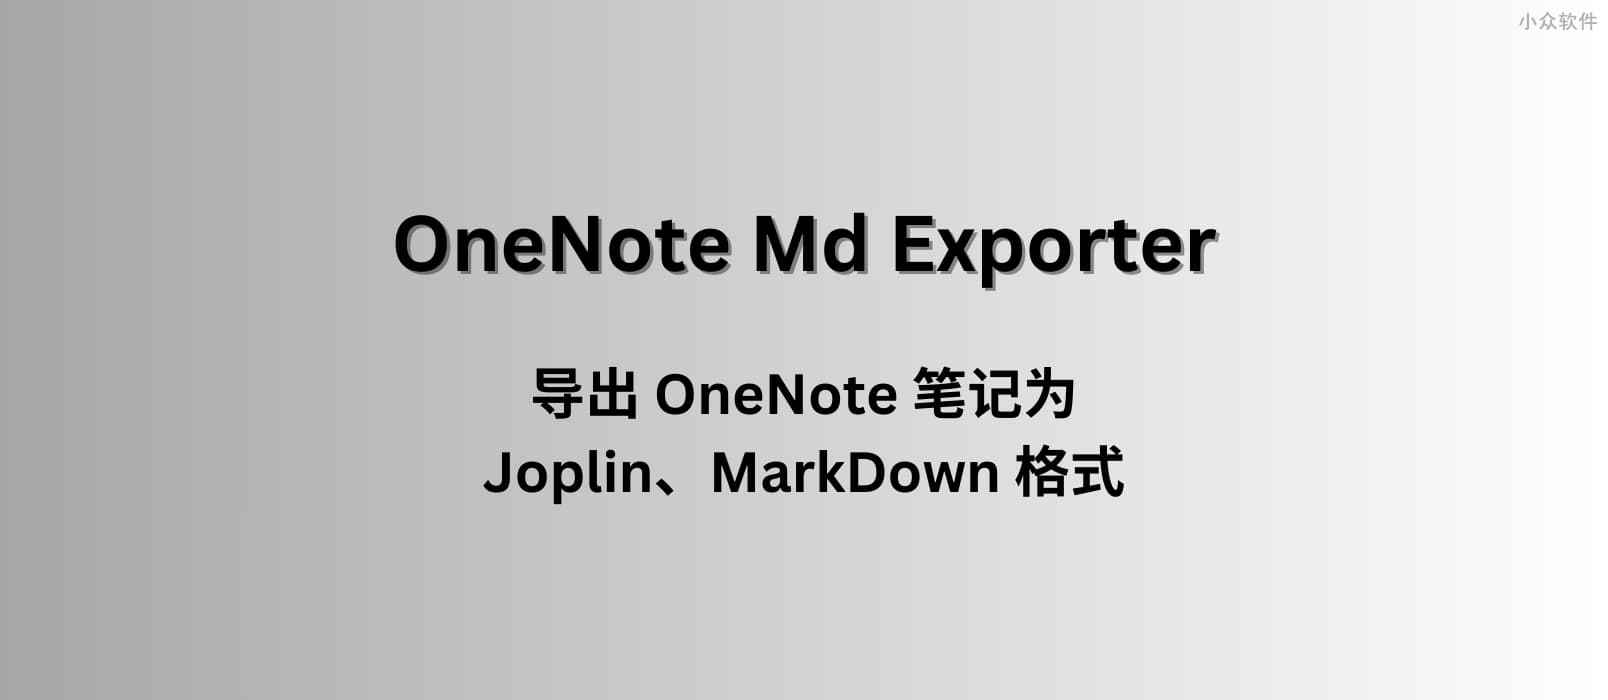 OneNote Md Exporter - 一键导出 OneNote 笔记为 Joplin、MarkDown 格式[Windows]